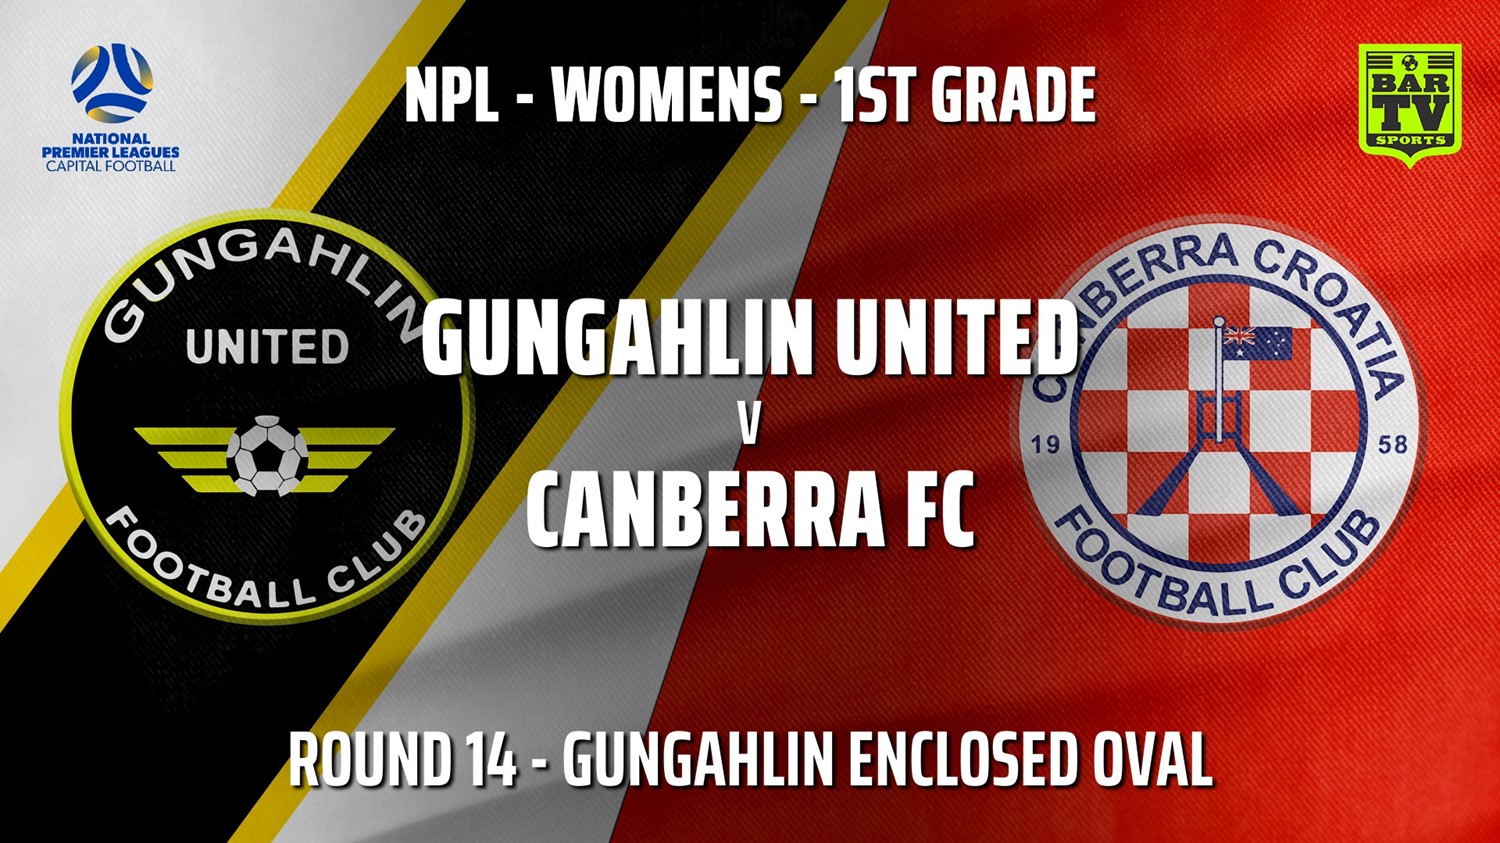 210728-Capital Womens Round 14 - Gungahlin United FC (women) v Canberra FC (women) Slate Image